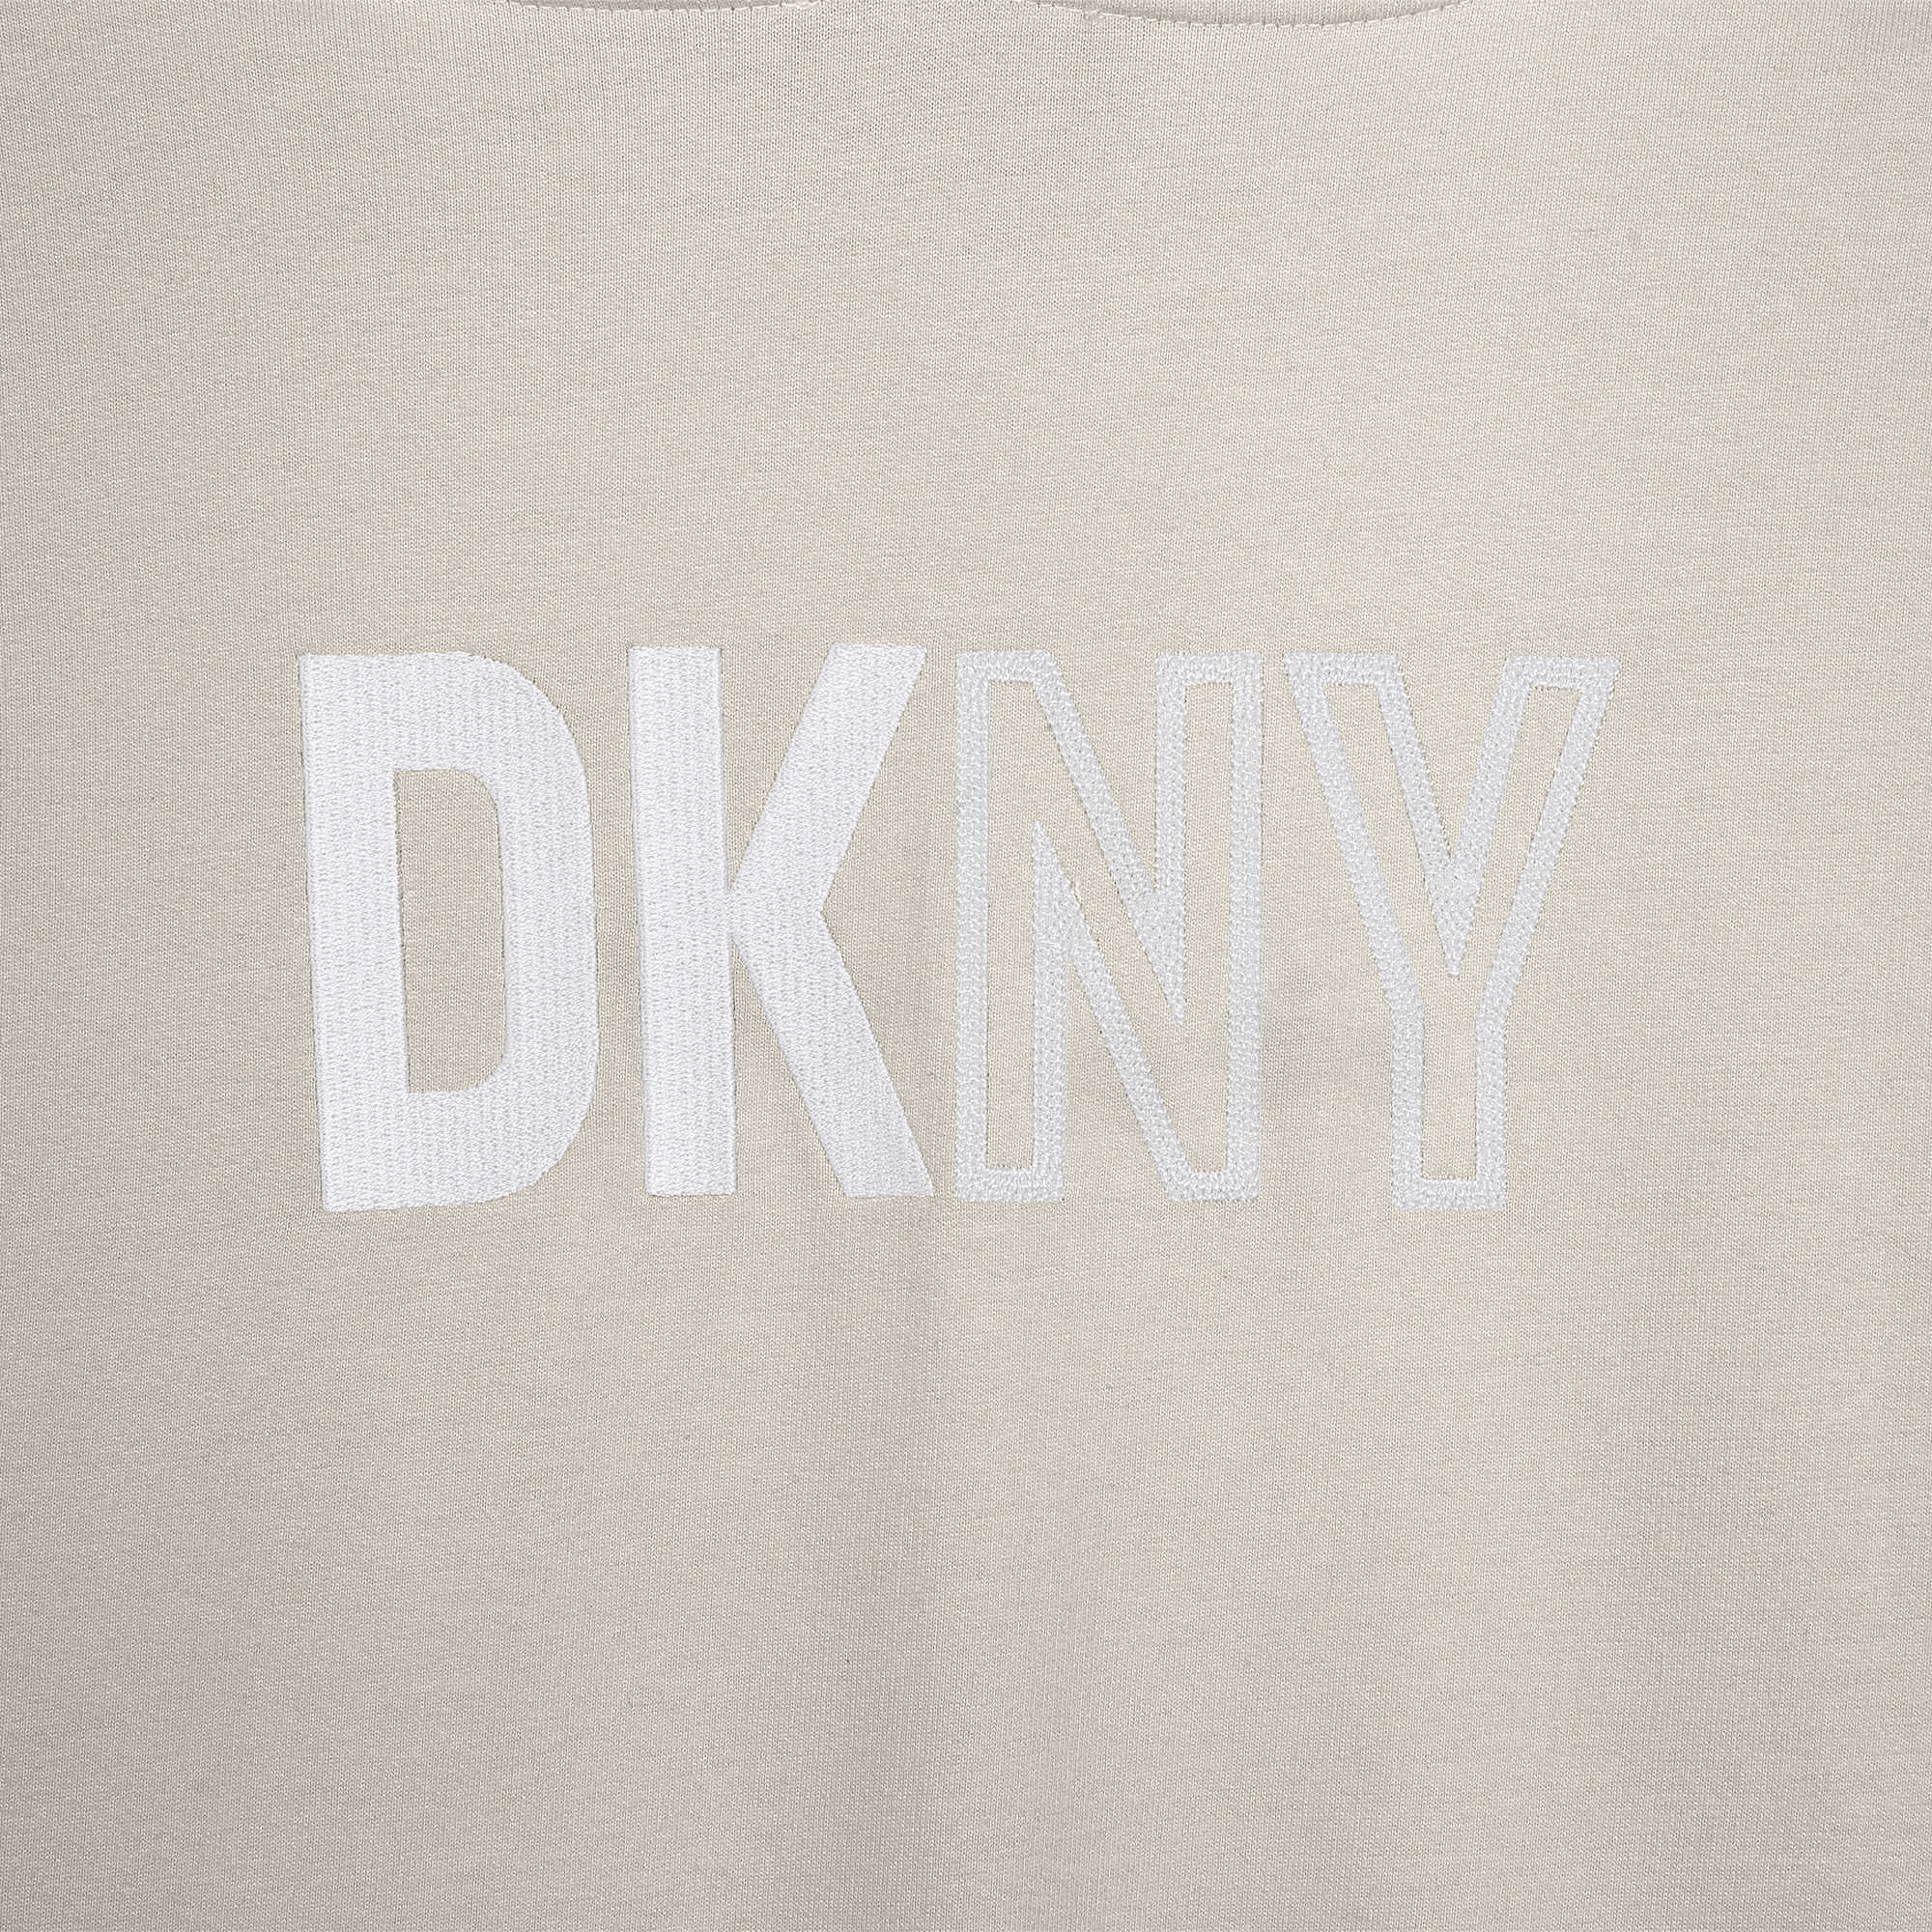 Unisex fleece cardigan DKNY for UNISEX